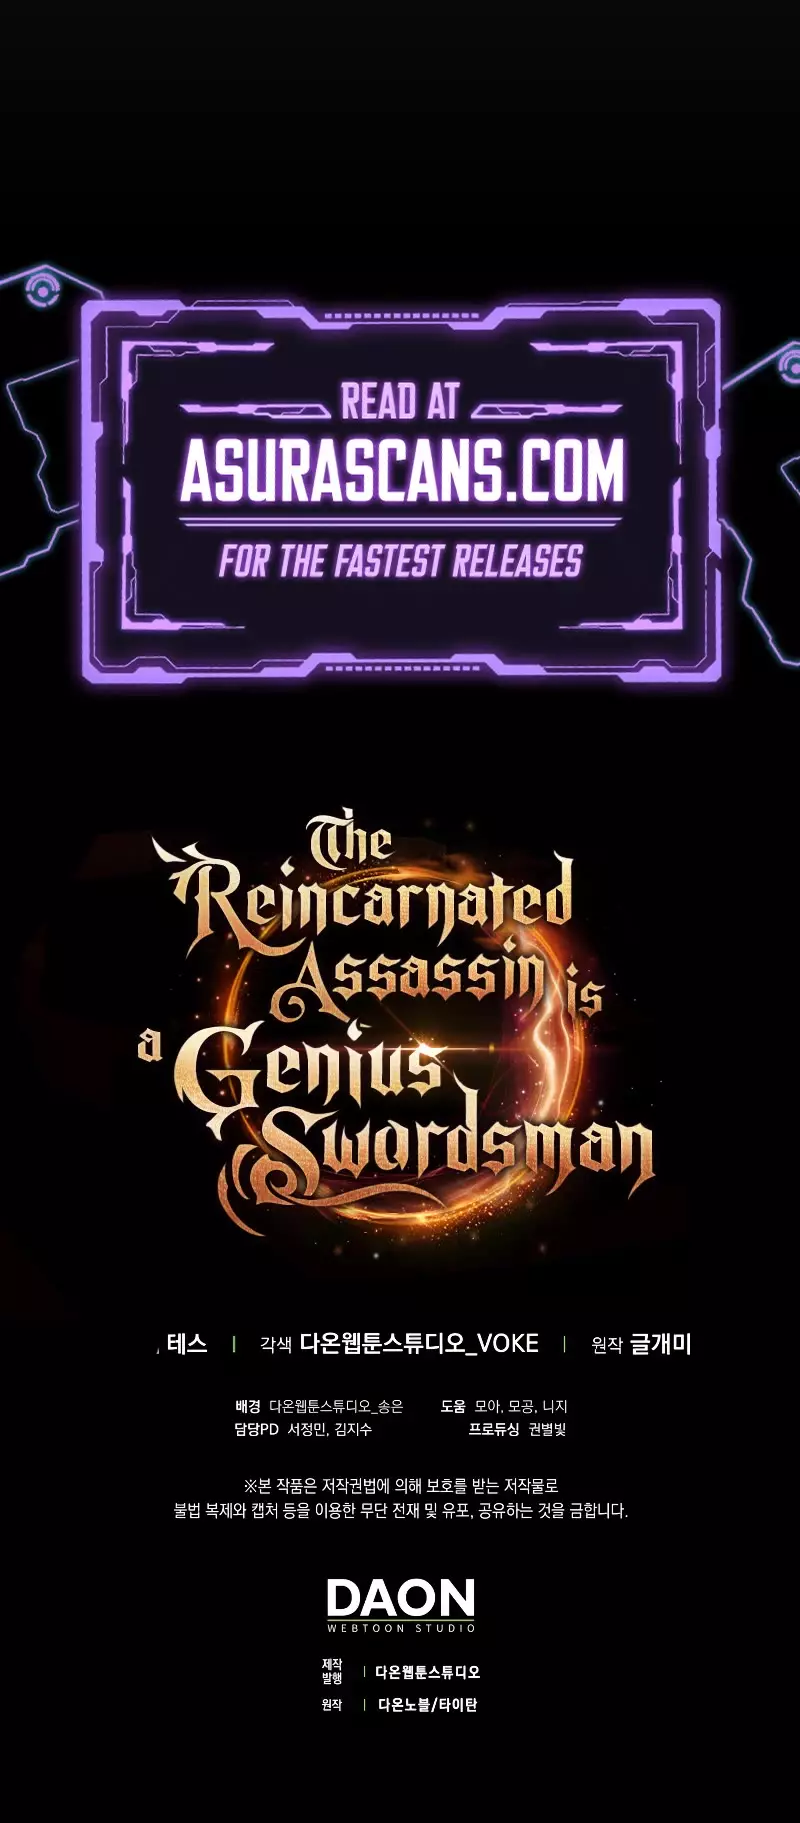 The Reincarnated Assassin is a Genius Swordsman - Reaper Scans